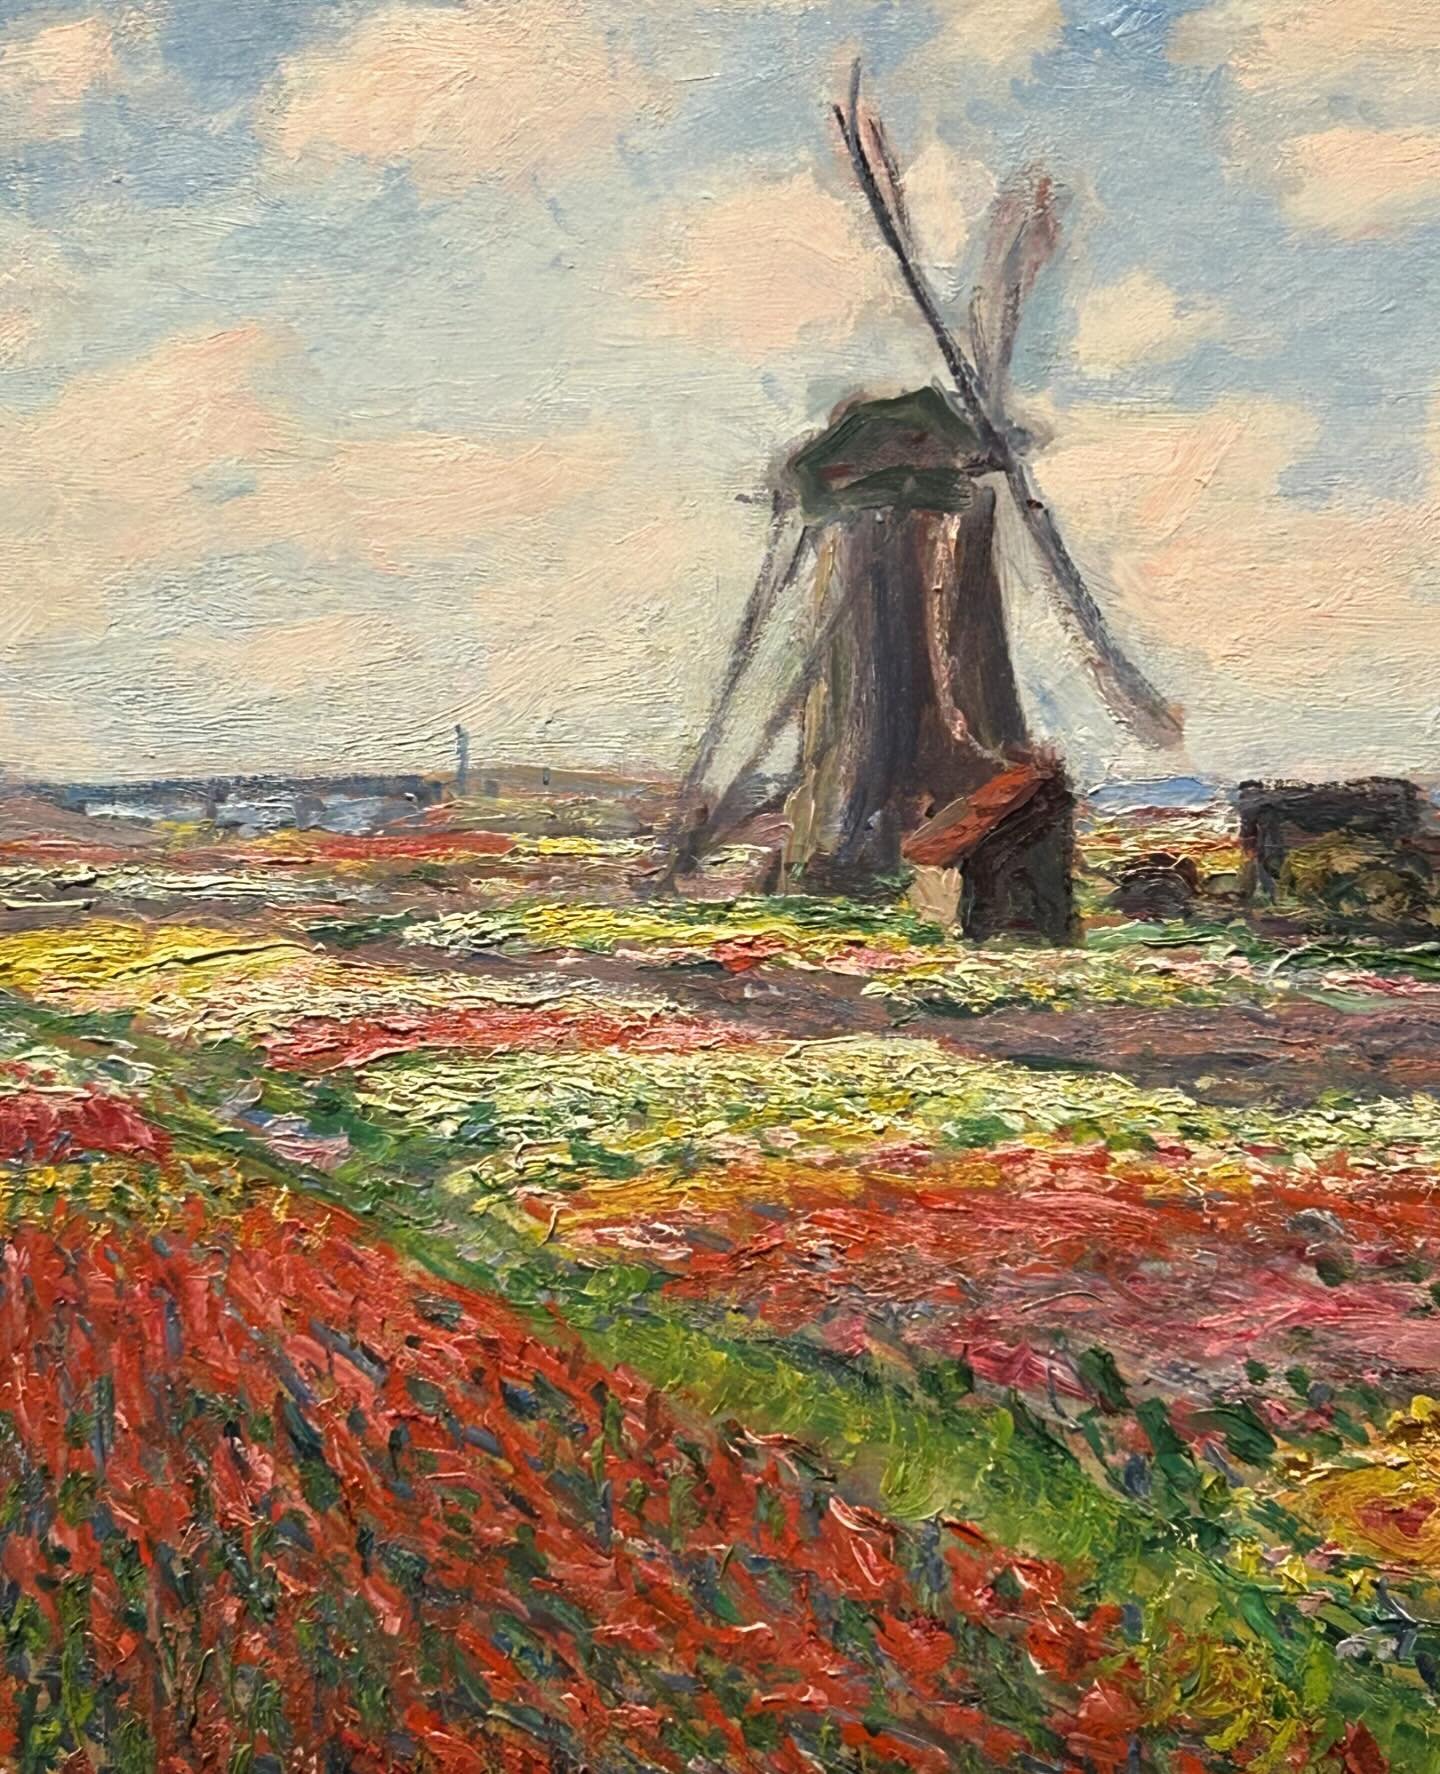 Claude Monet, Tulip Fields in Holland, 1886 (detail). #happyeaster #monet #museedorsay #impressionism 🌷🐇🌷